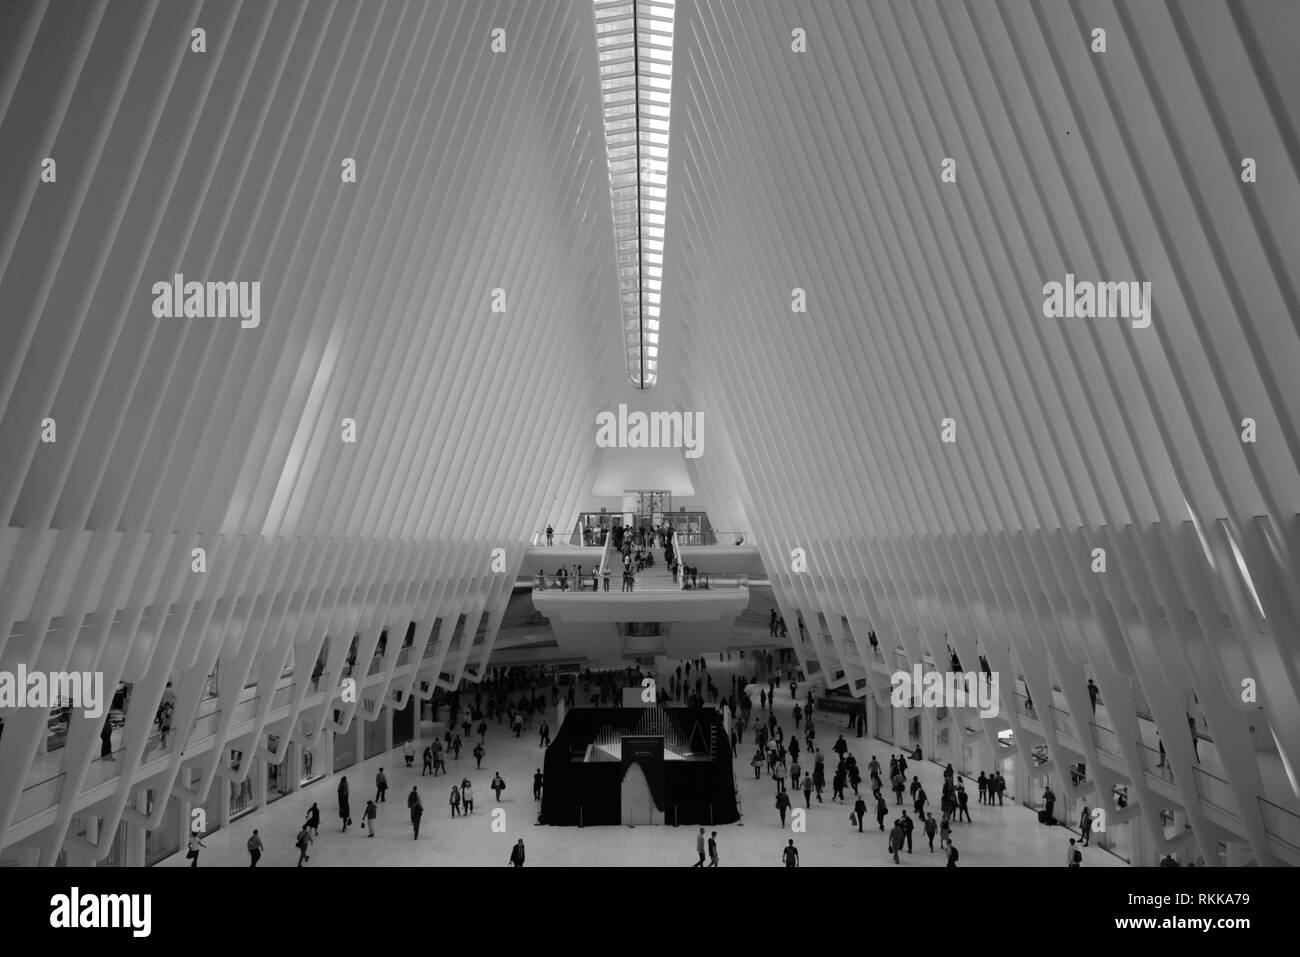 the oculus - new york city Stock Photo